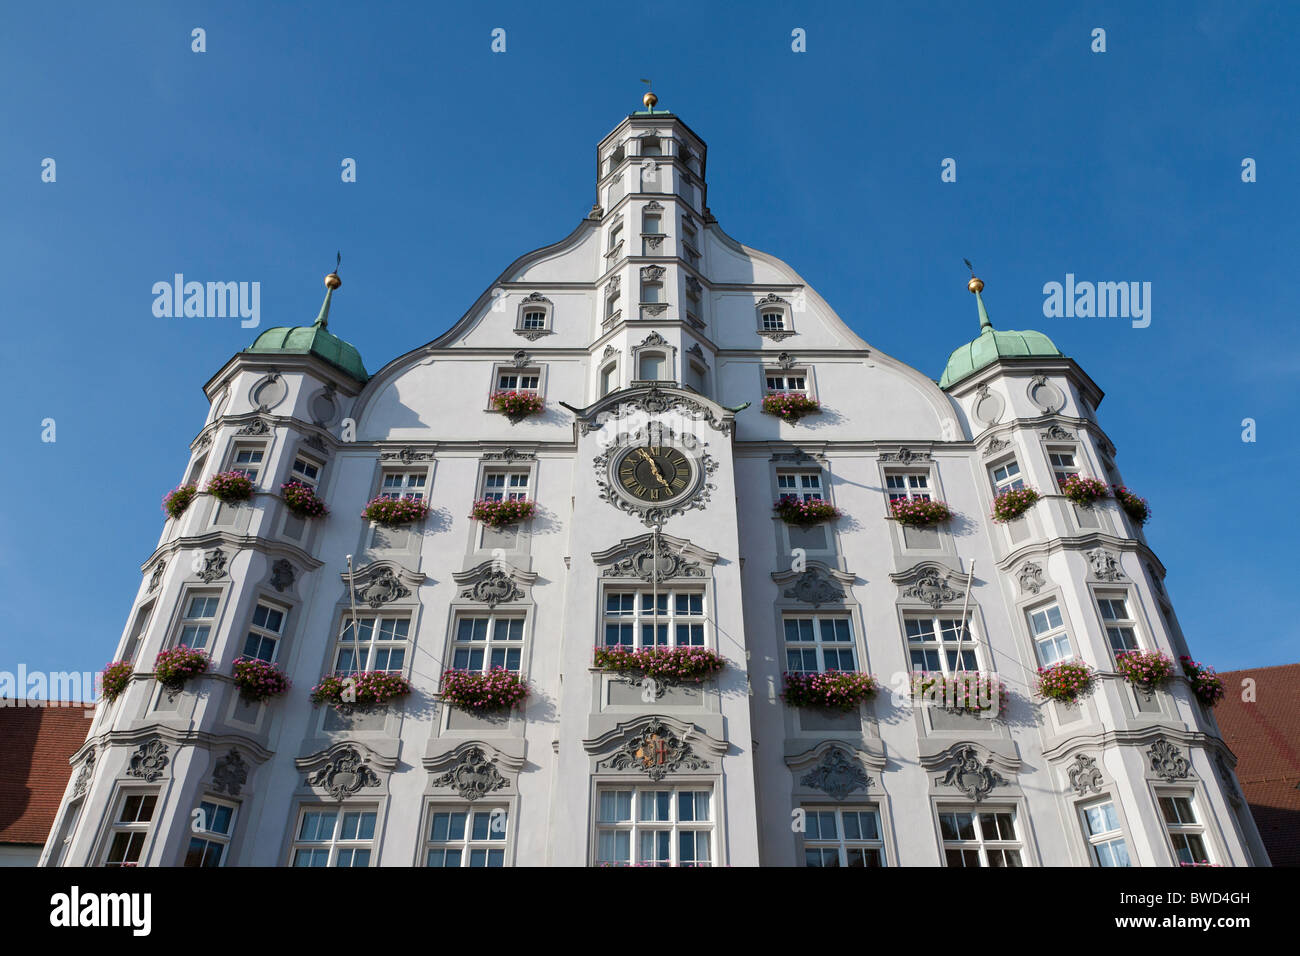 CITY HALL, MARKTPLATZ PLACE, BUILT IN 1589, MEMMINGEN, ALLGAEU, BAVARIA, GERMANY Stock Photo